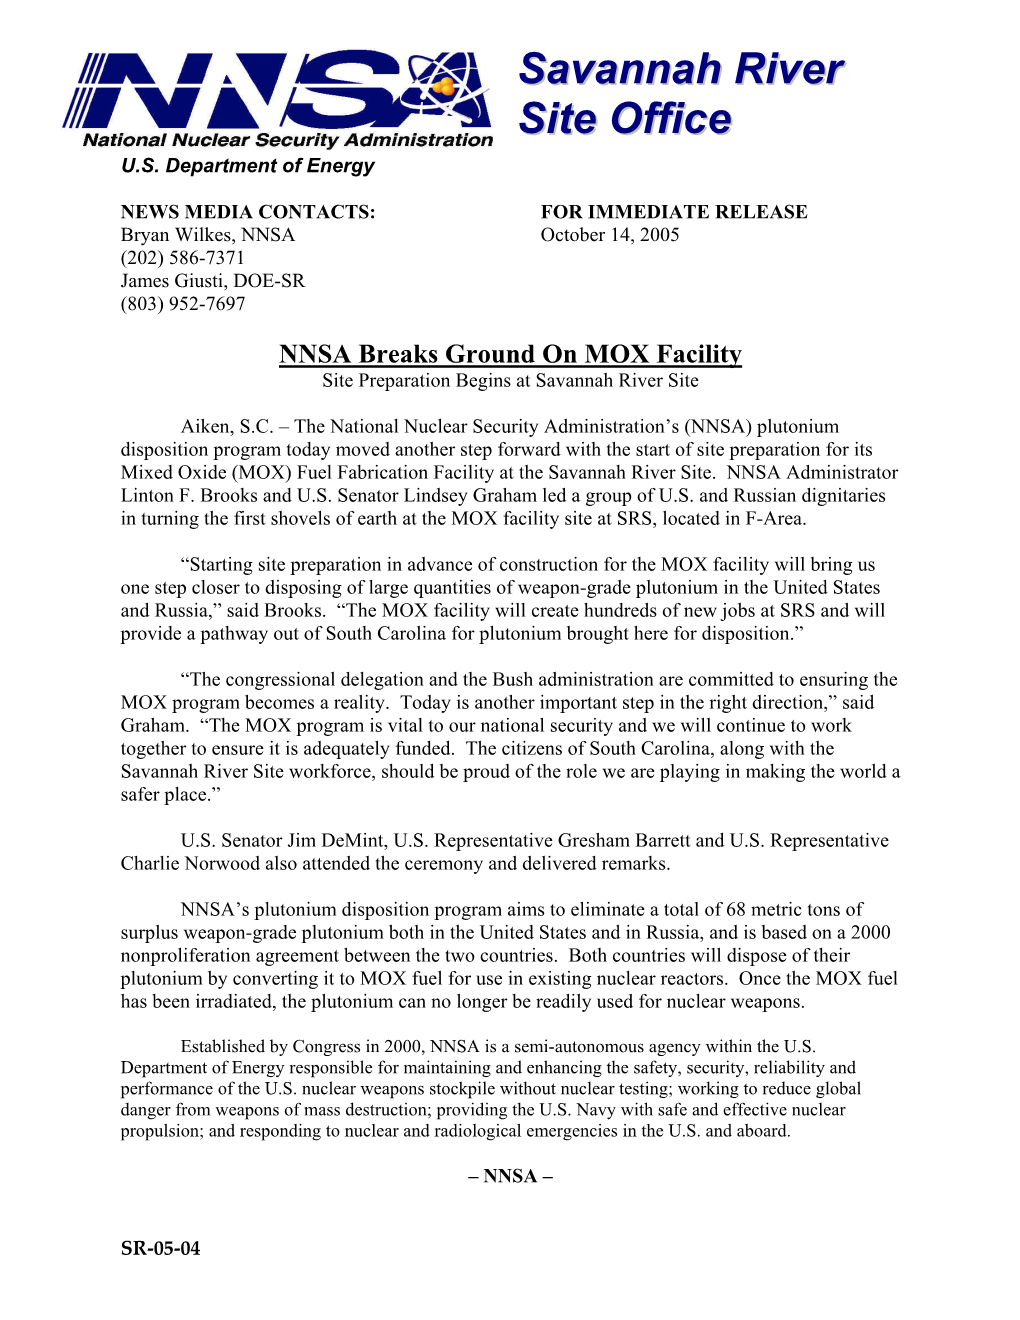 DOE Press Release-NNSA Breaks Ground on MOX Facility